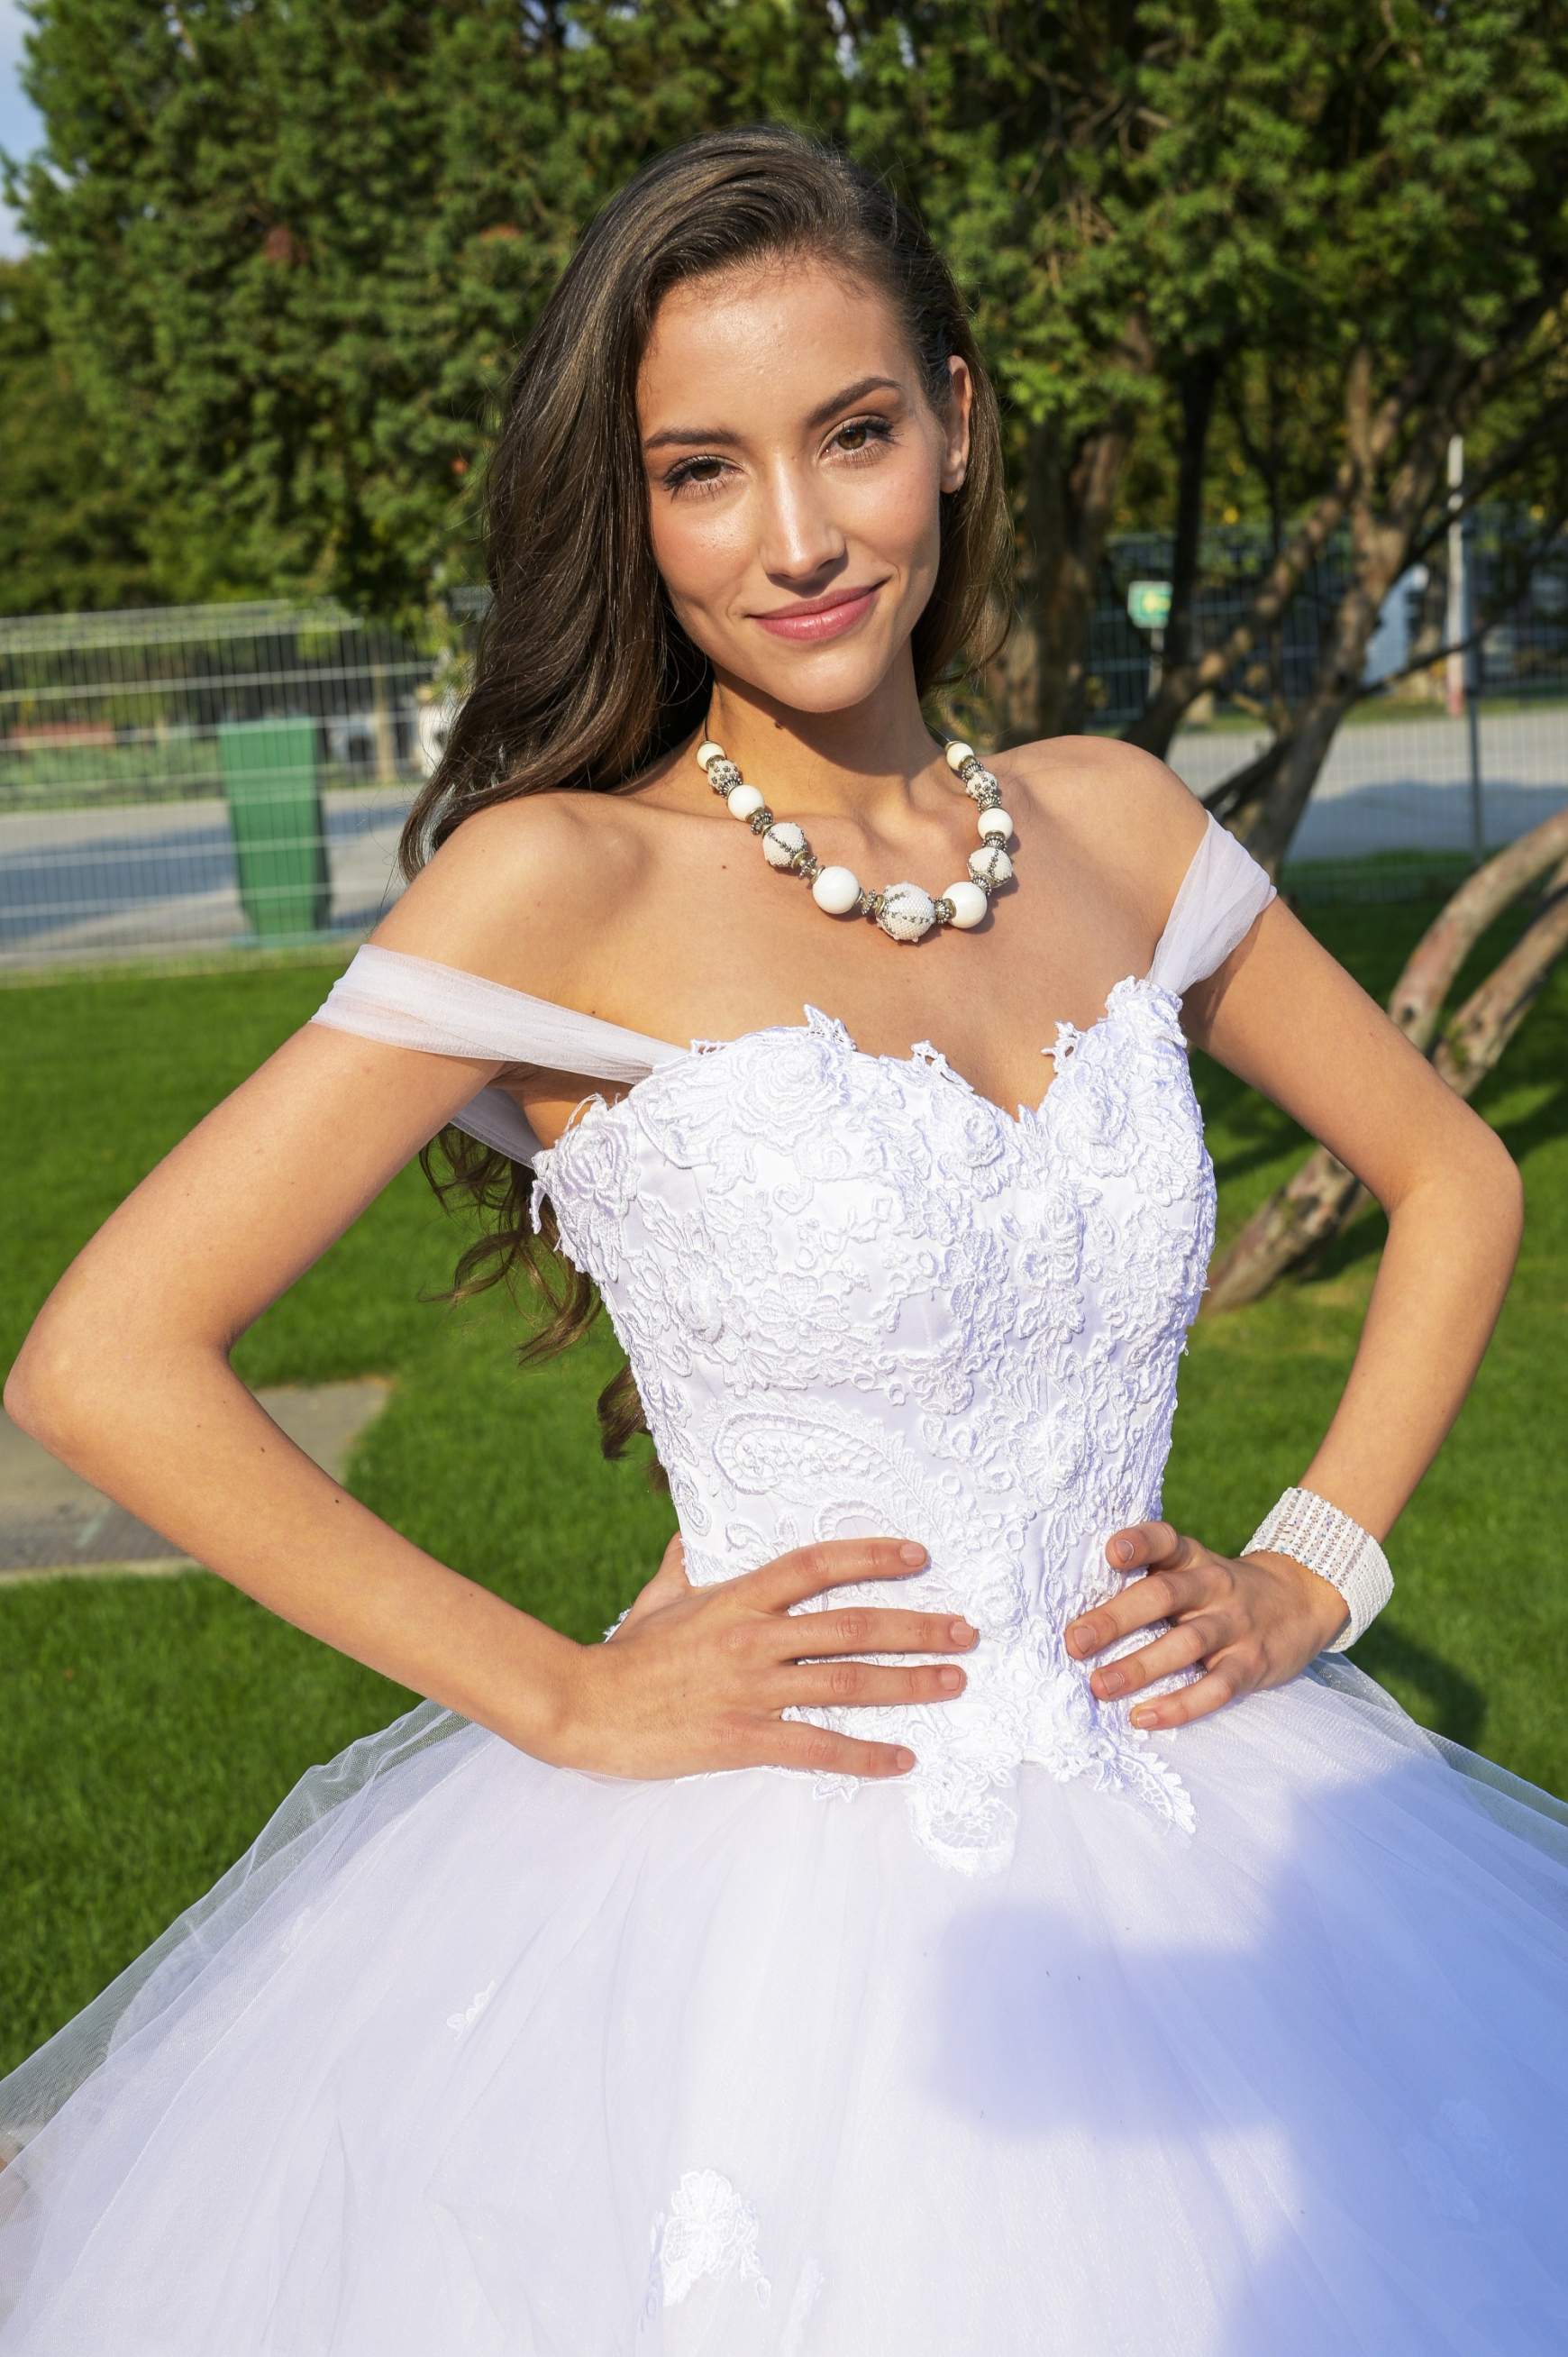 Miss Hungary 2021